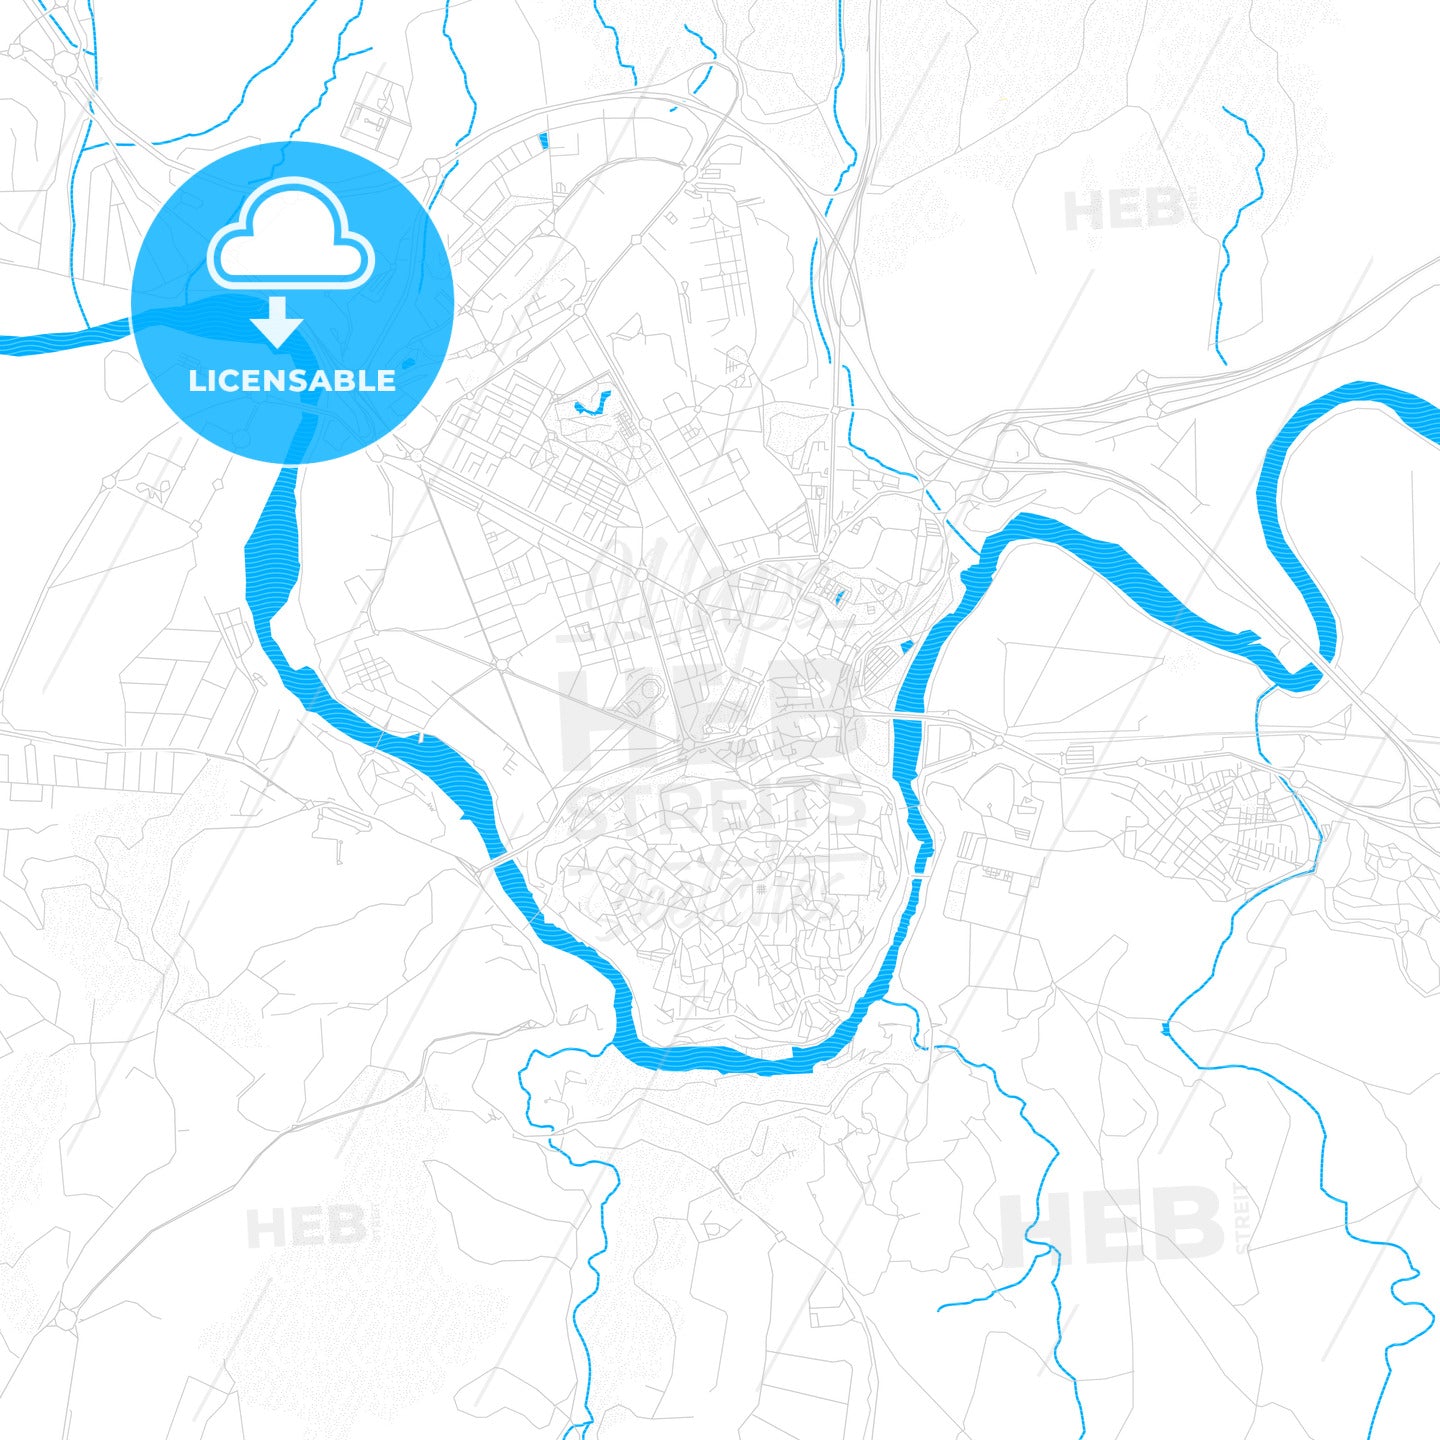 Toledo, Spain PDF vector map with water in focus